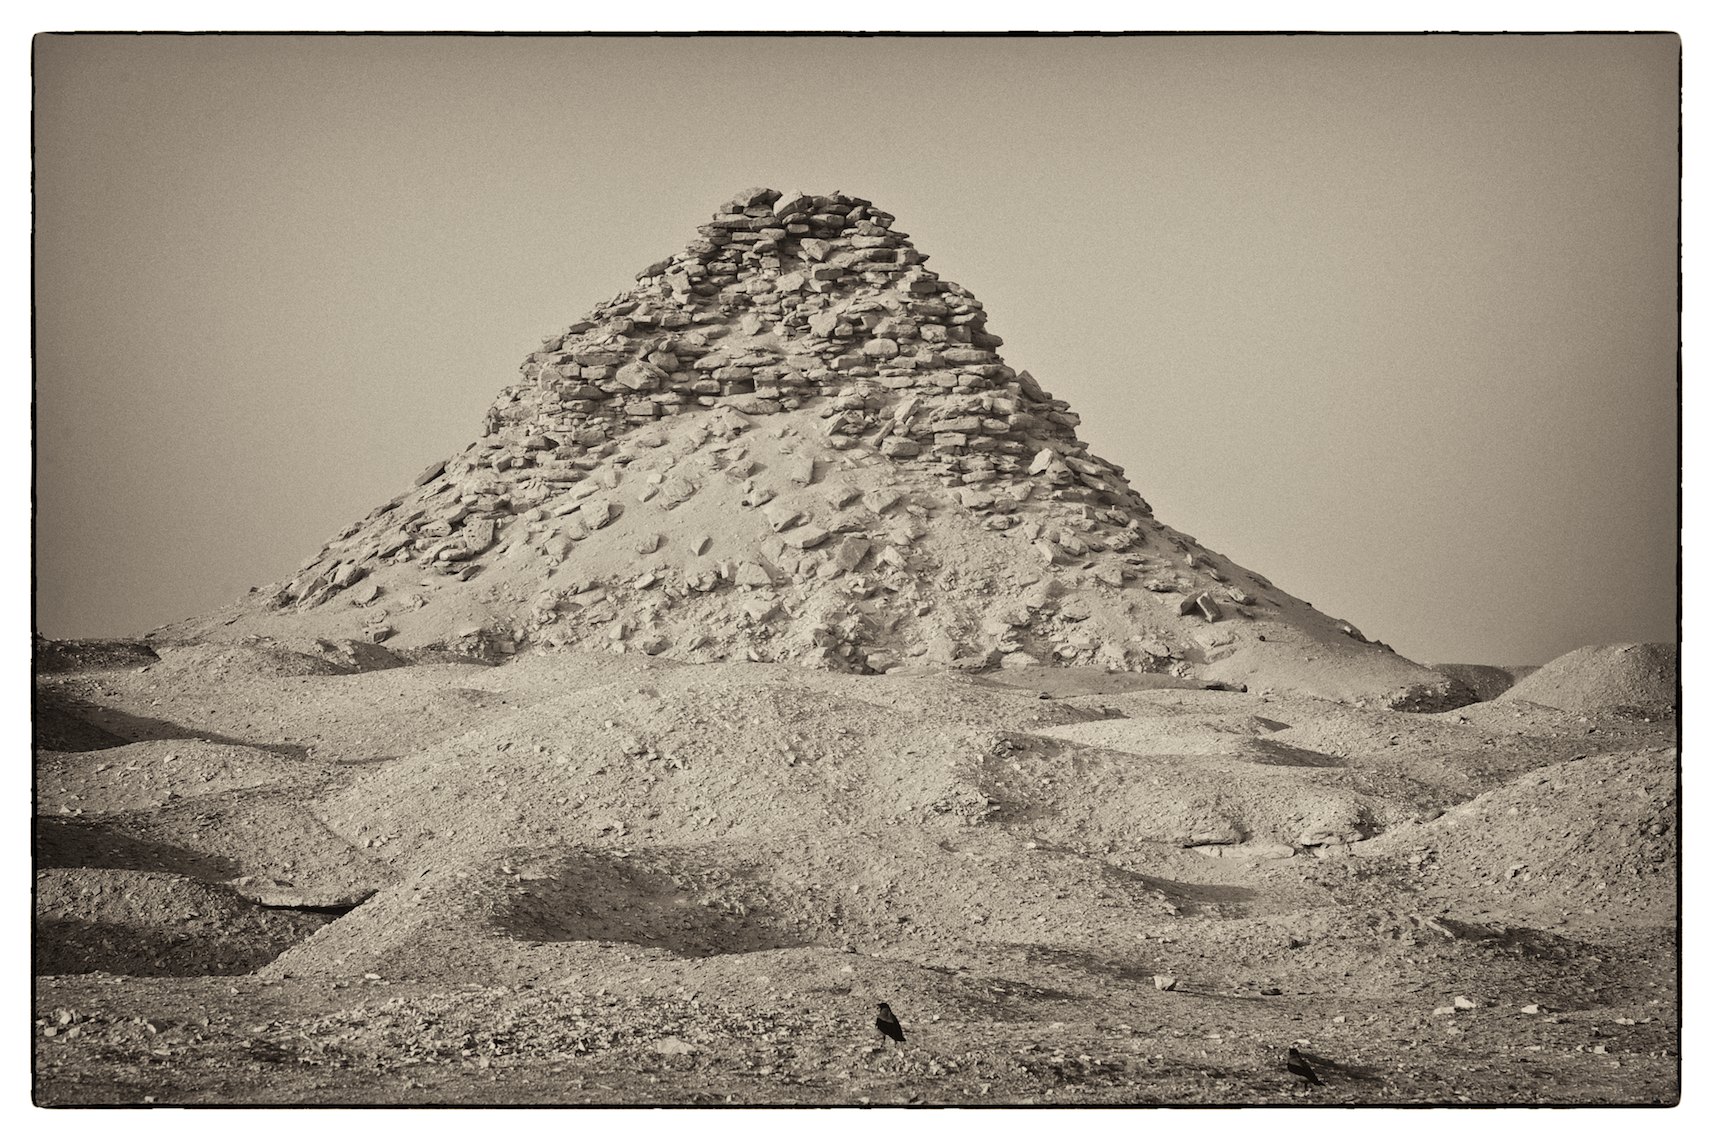 Barth_Egypt_pyramids 010.jpg